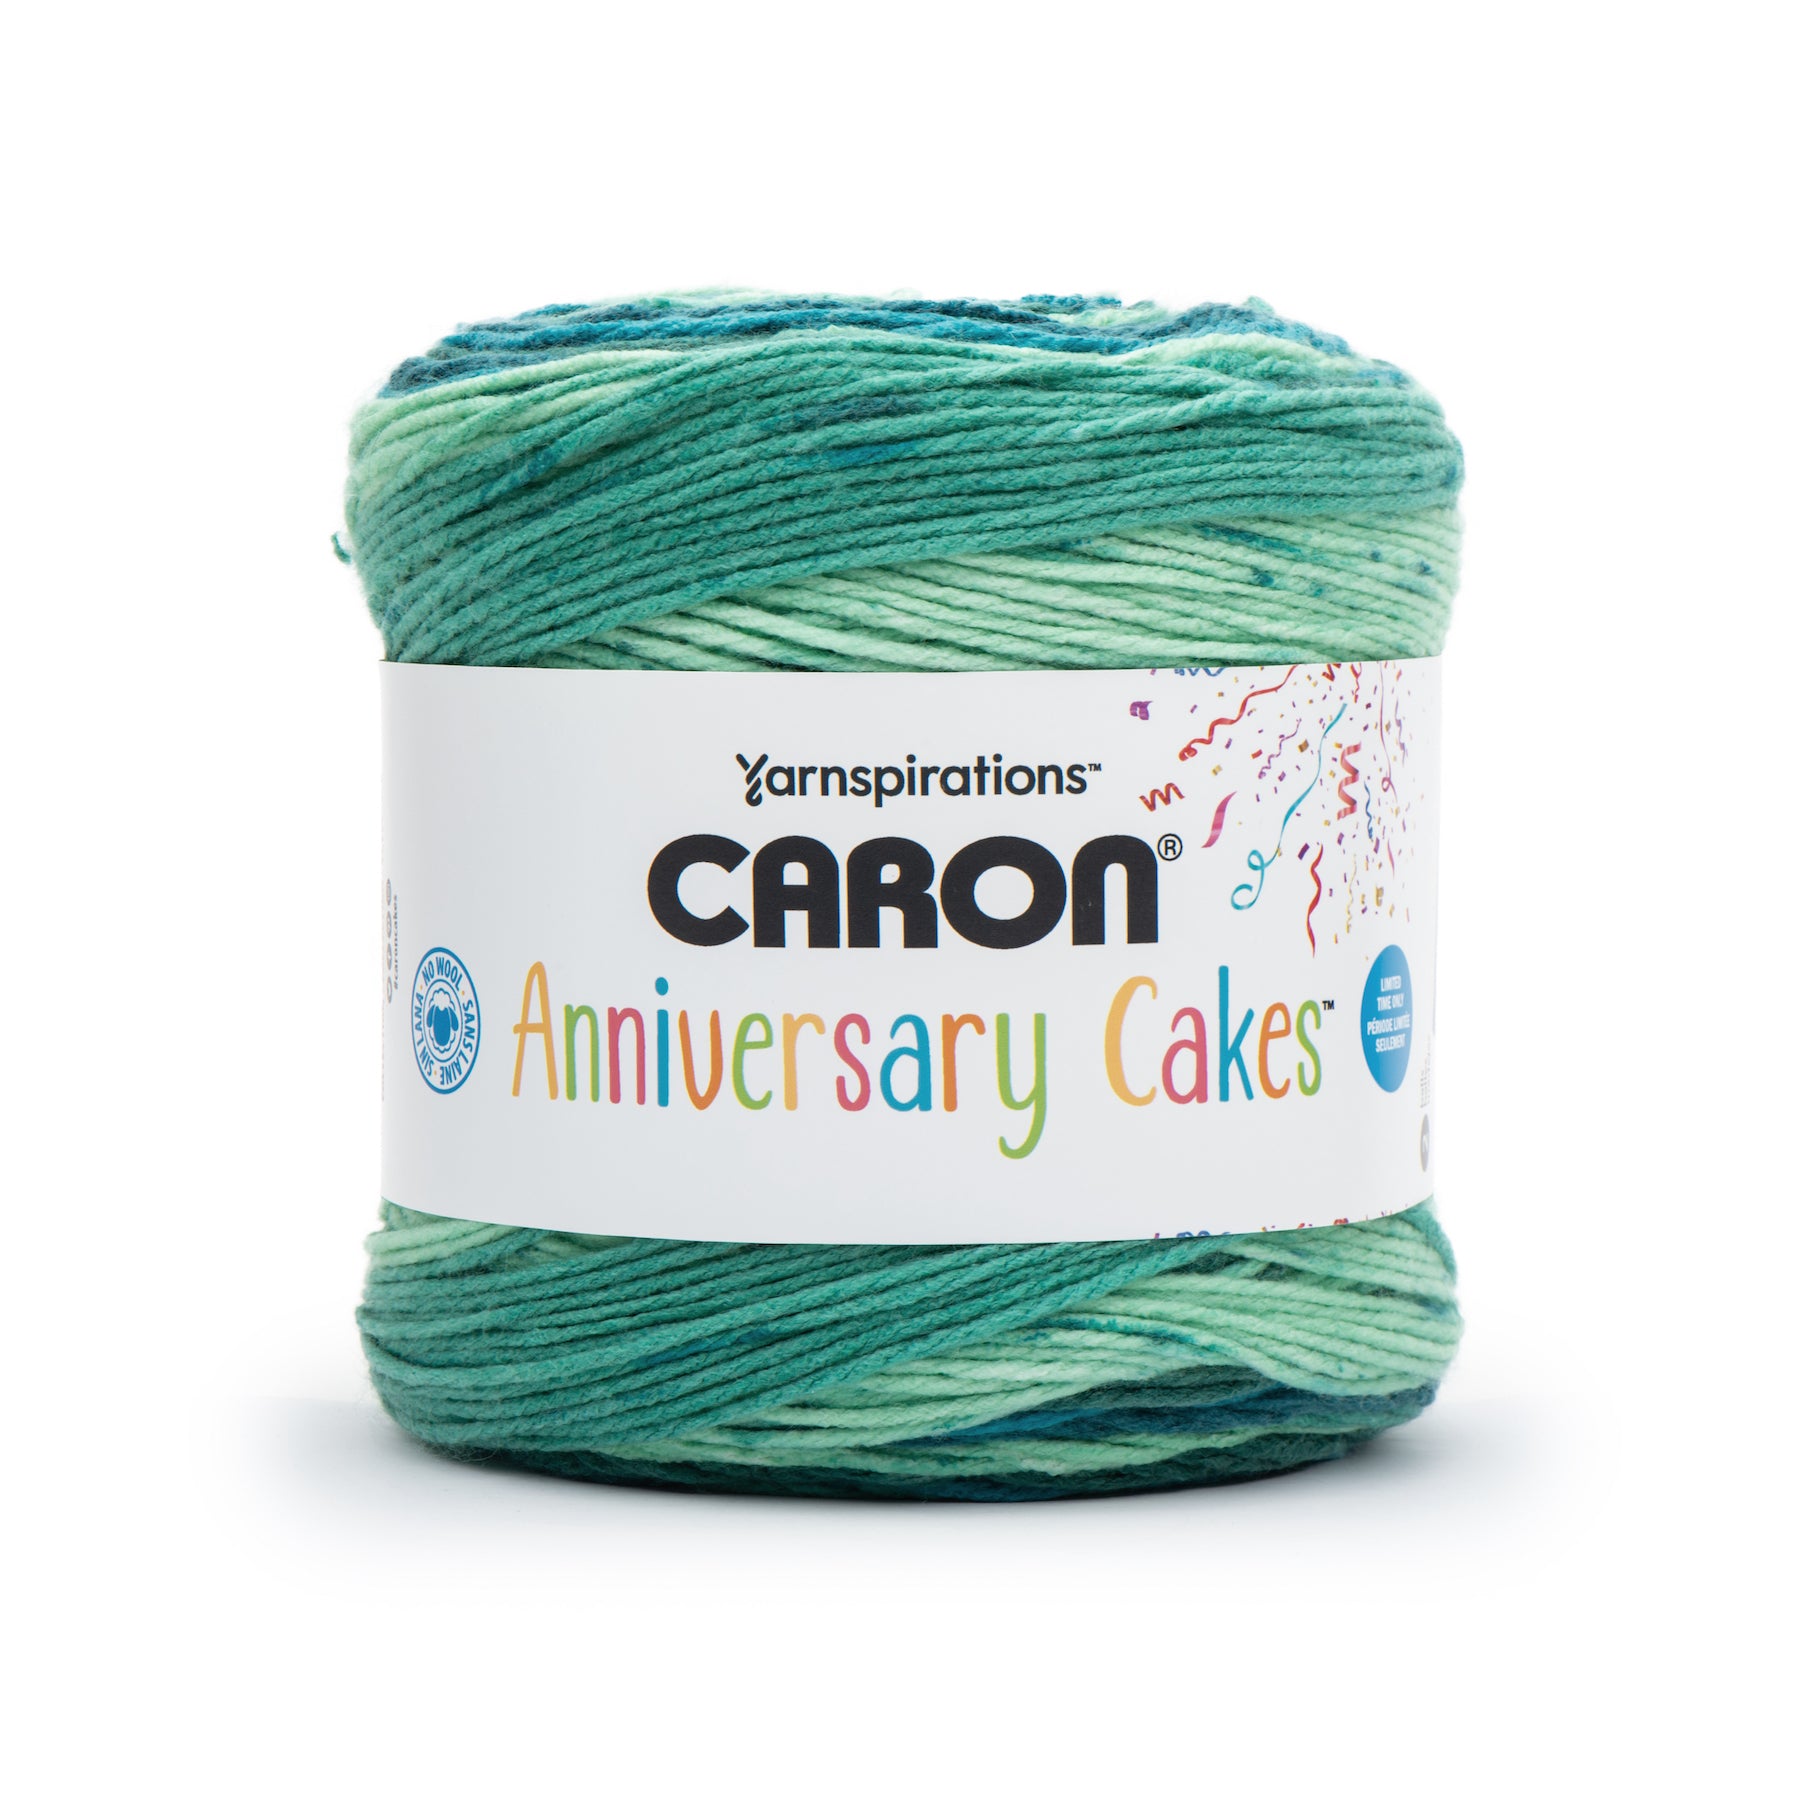 Yarnspirations Caron Anniversary Cakes Yarn Reef Blue Yarn